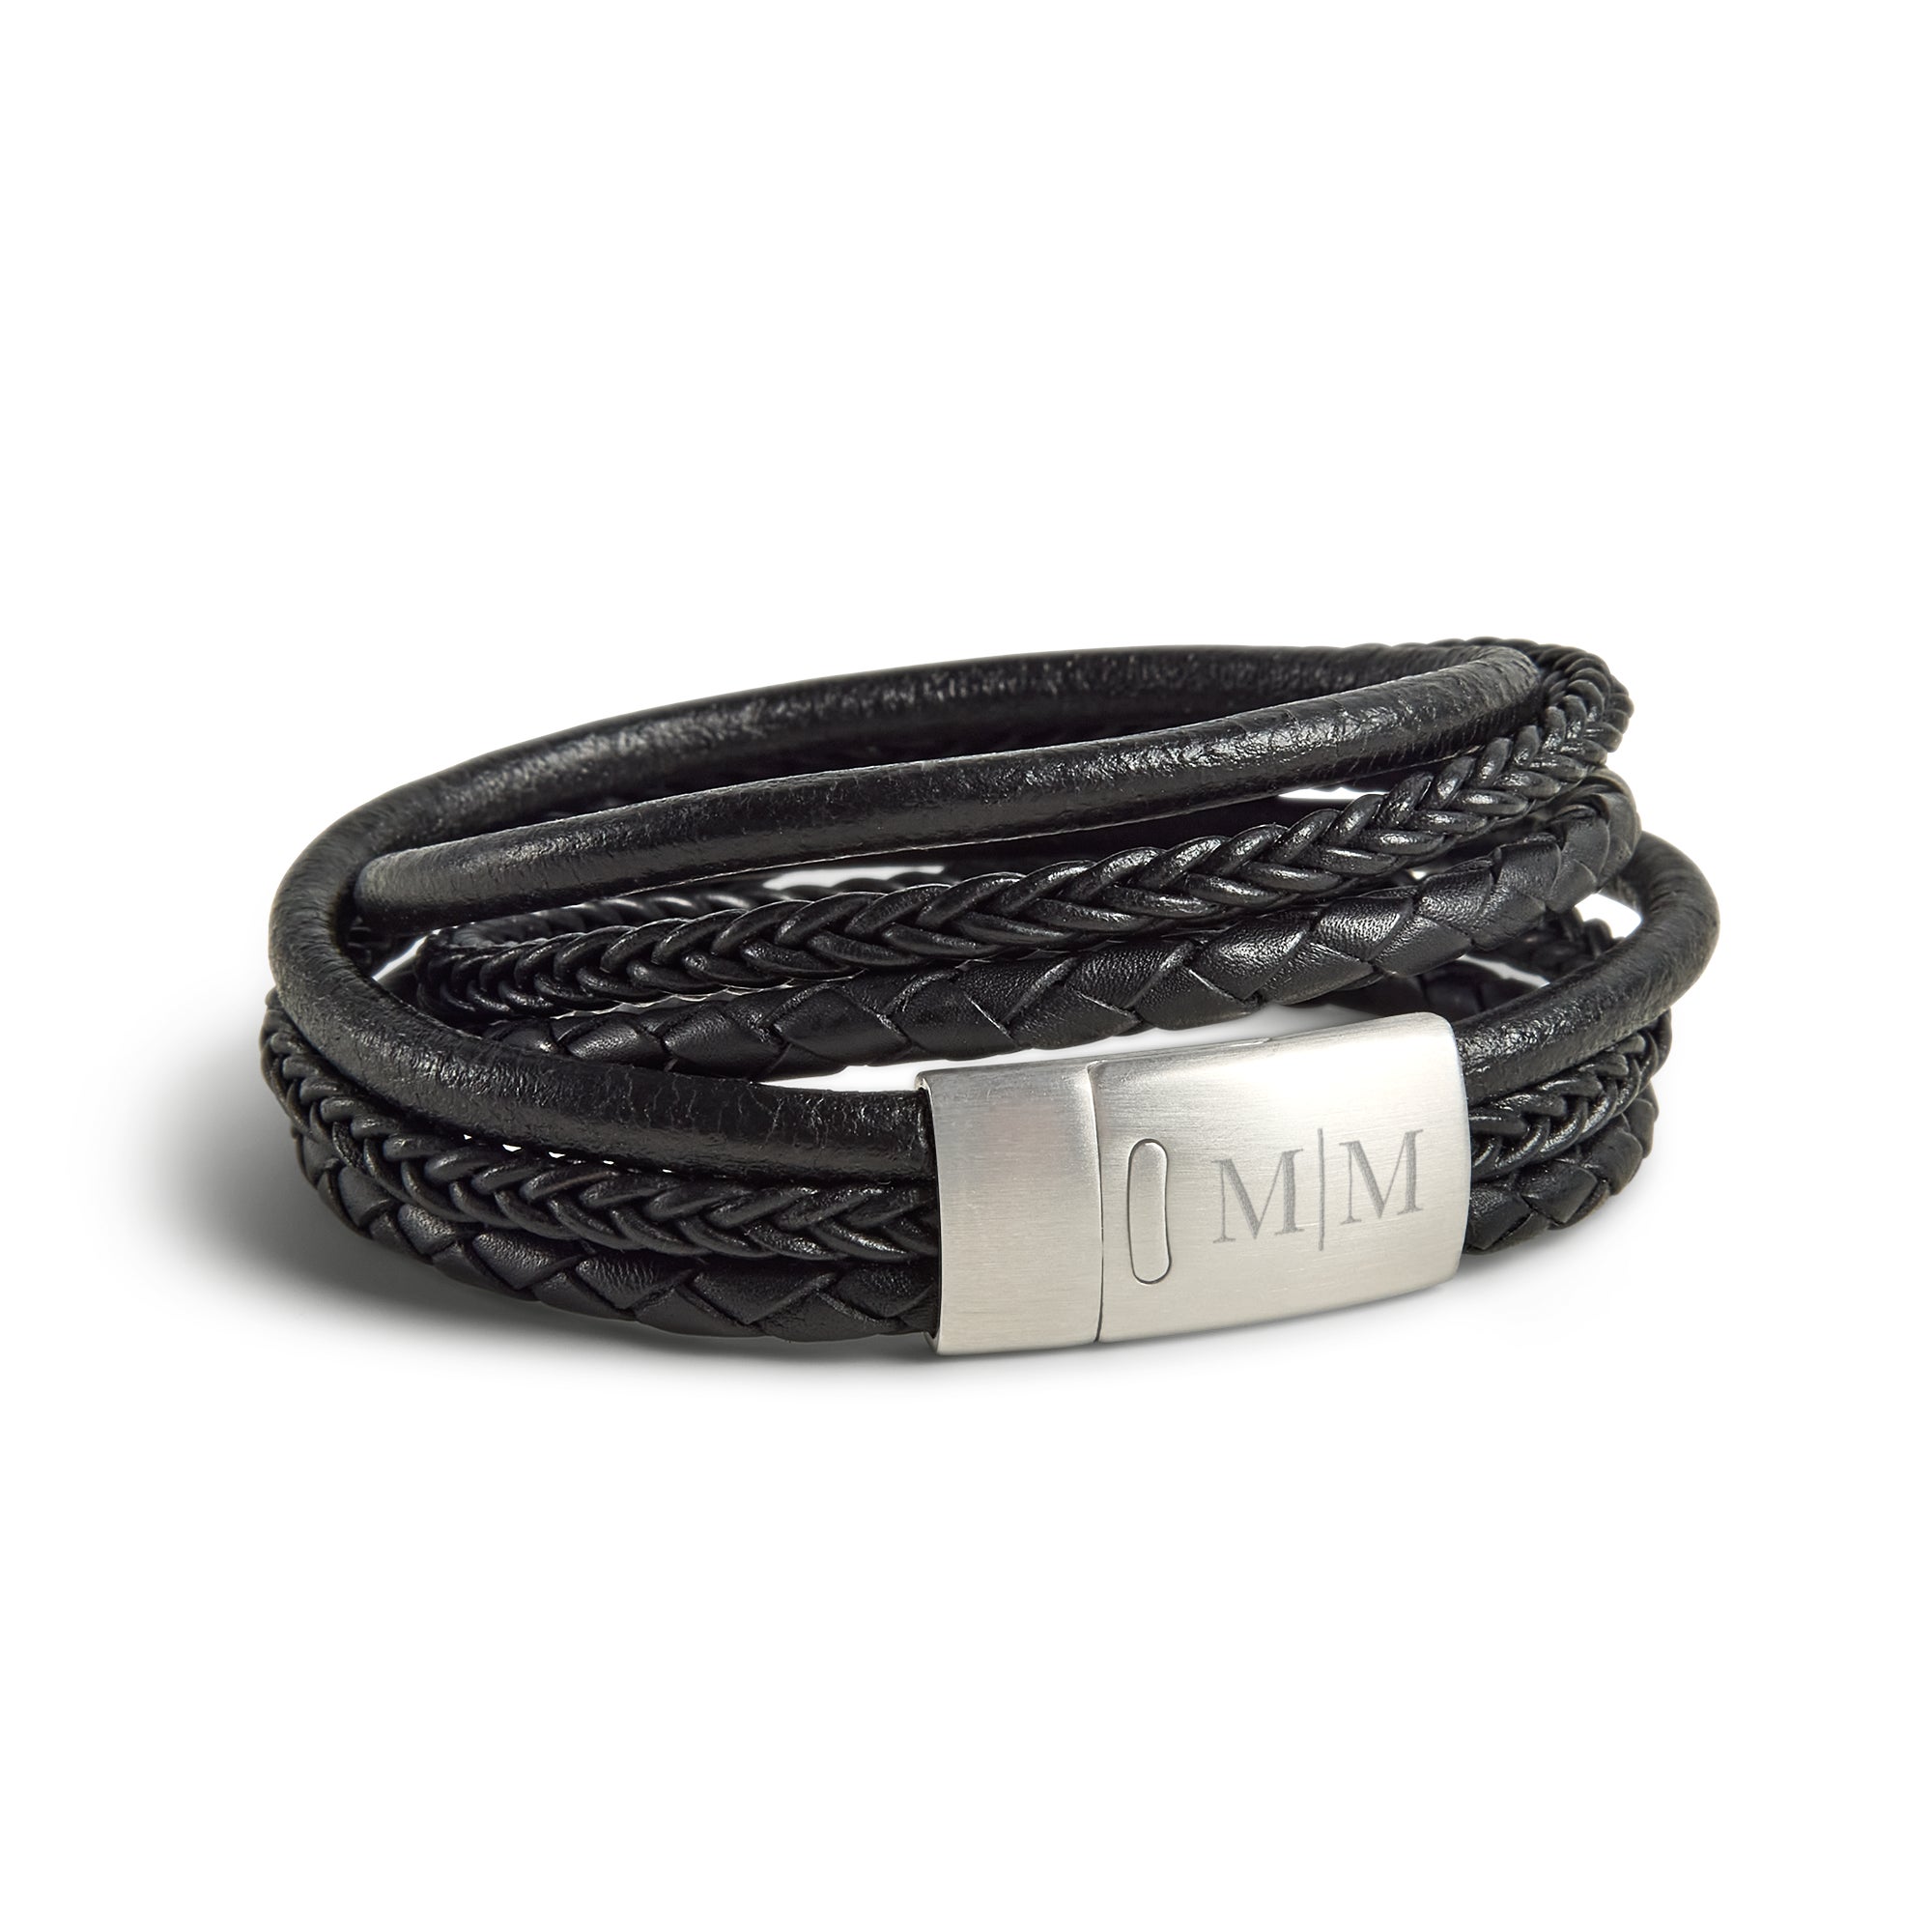 Luxurious double leather bracelet with engraving - Men - Black - L